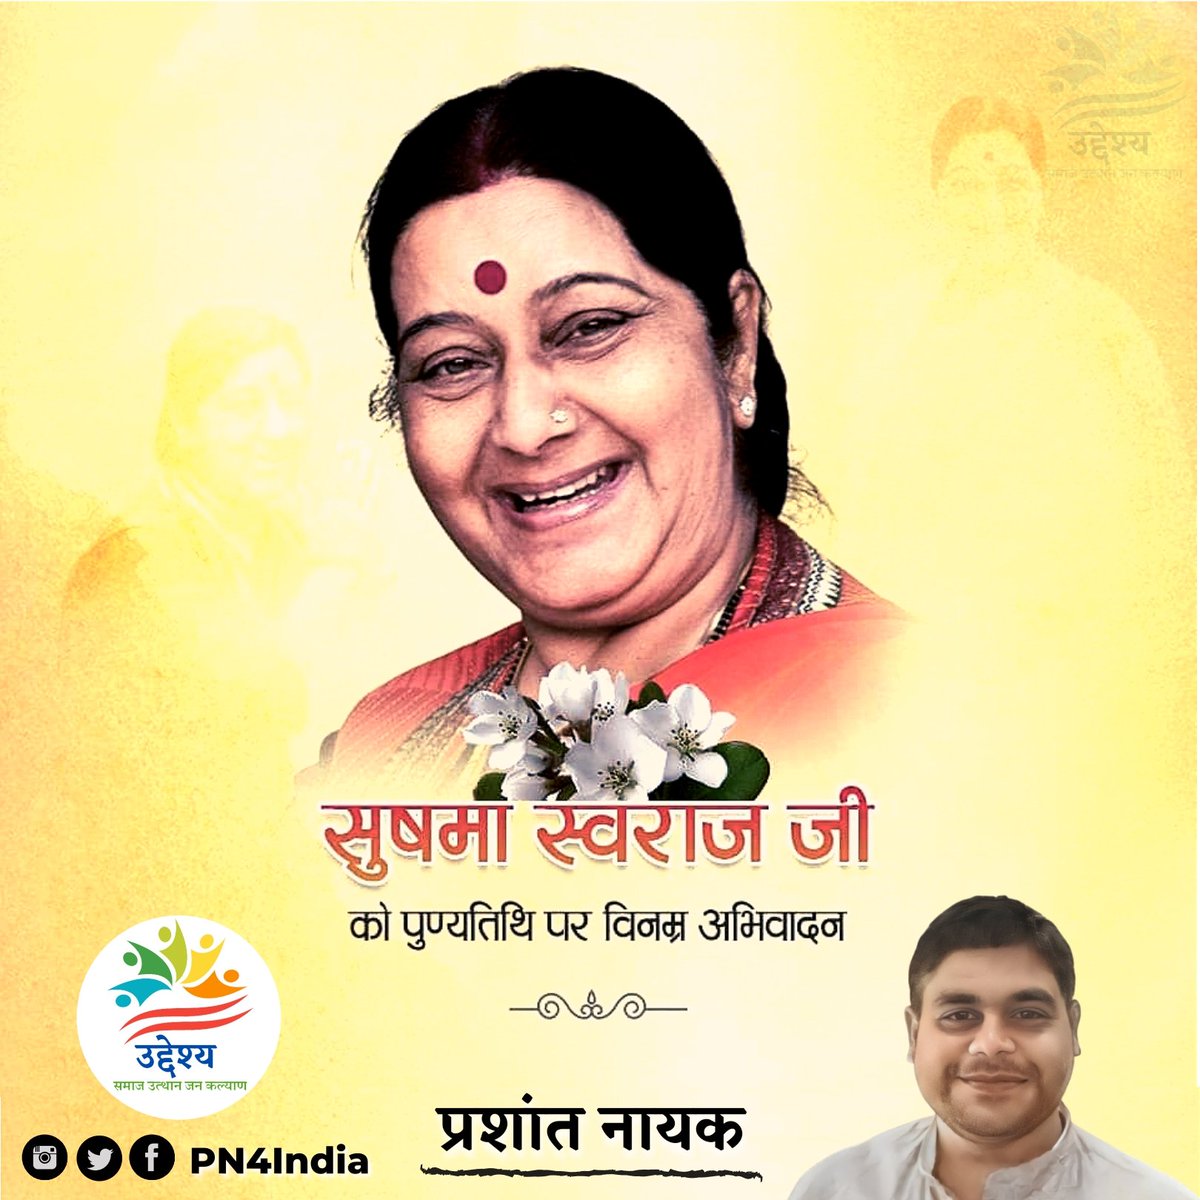 #SushmaSwaraj Photo,#SushmaSwaraj Photo by Prashant Nayak,Prashant Nayak on twitter tweets #SushmaSwaraj Photo